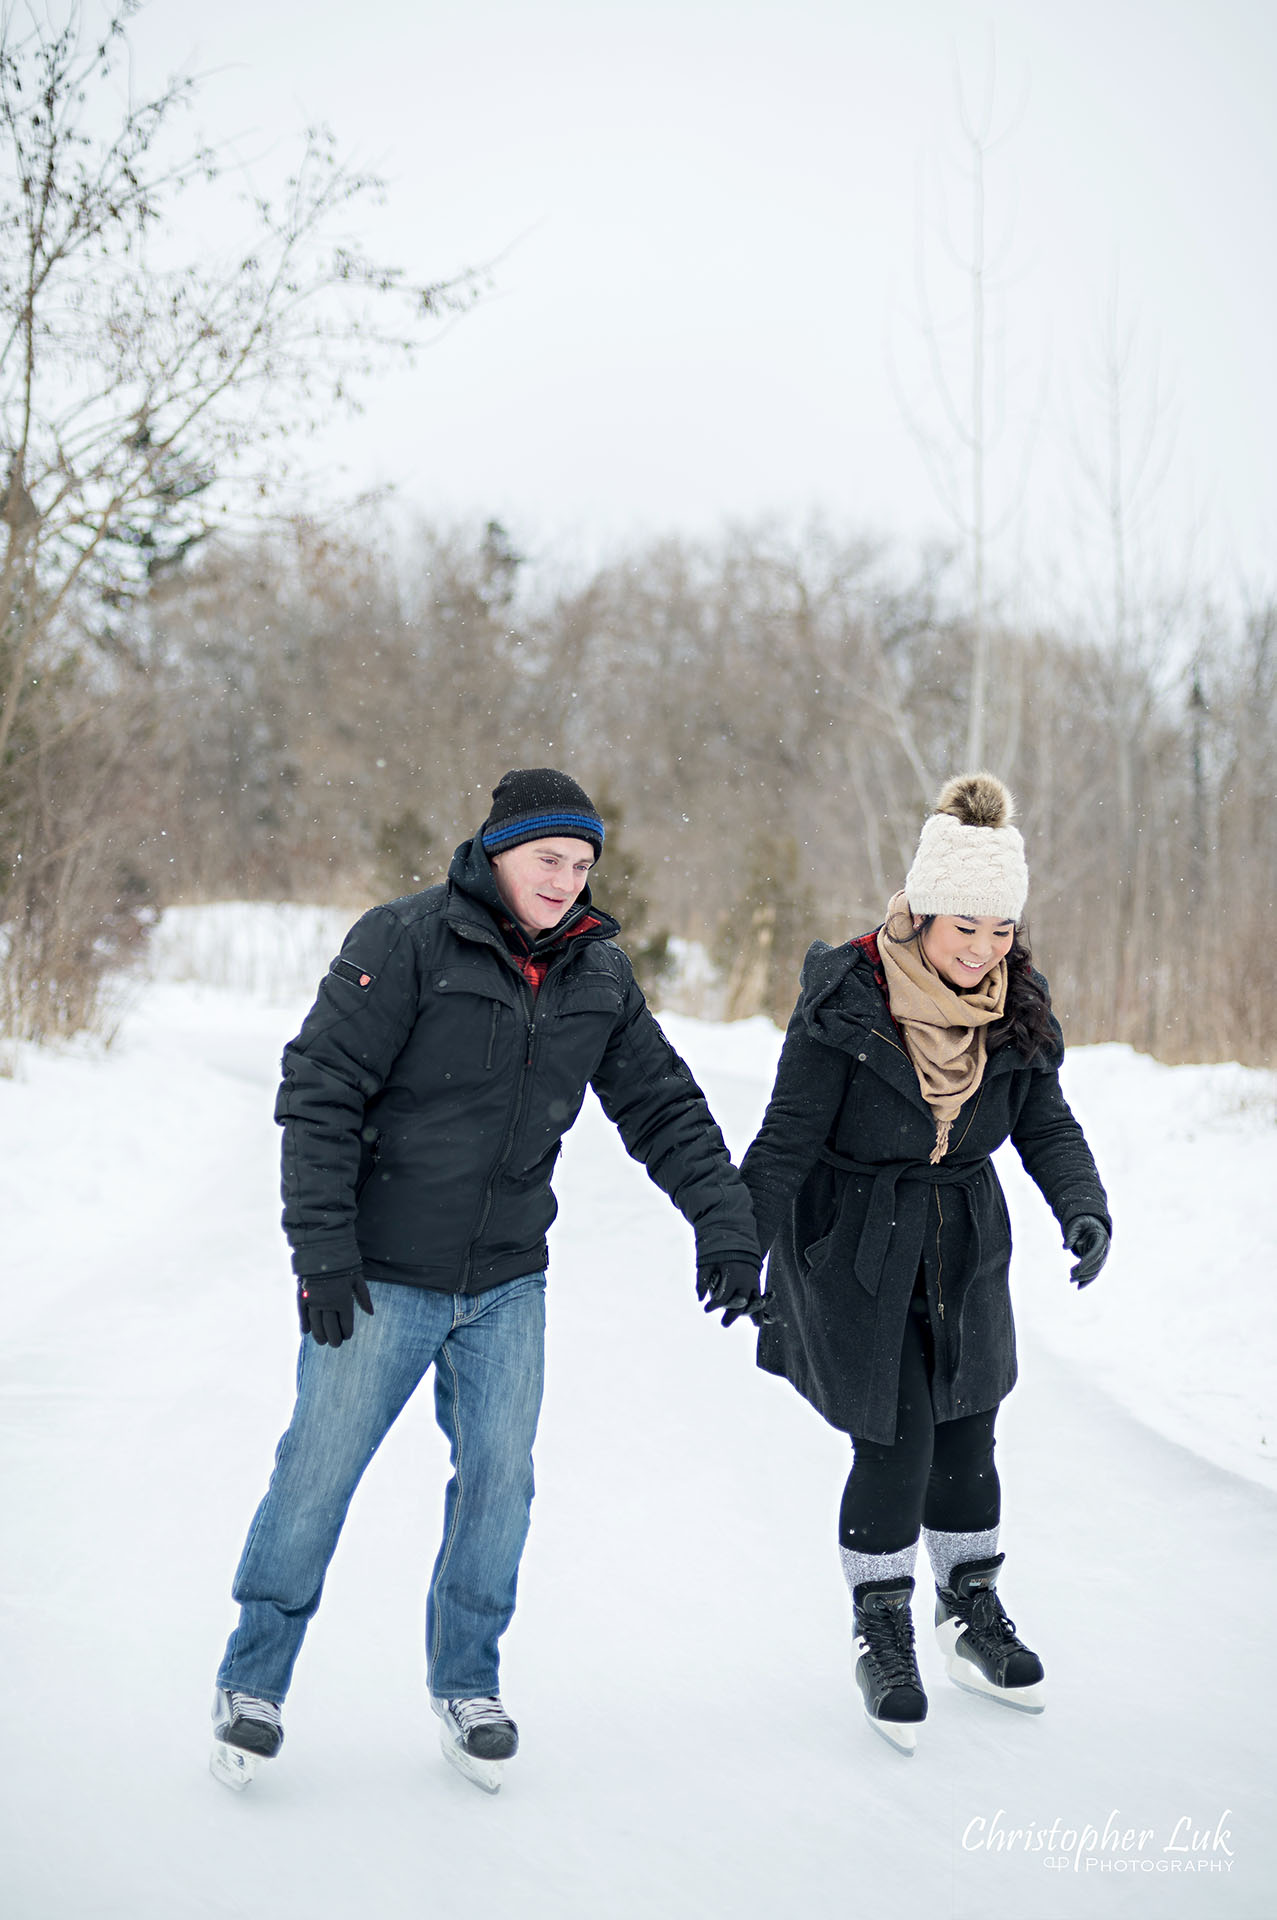 Christopher Luk Toronto Wedding Photographer Ice Skating Trail Winter Engagement Session Natural Photojournalistic Candid Bride Groom Holding Hands Bridge Close